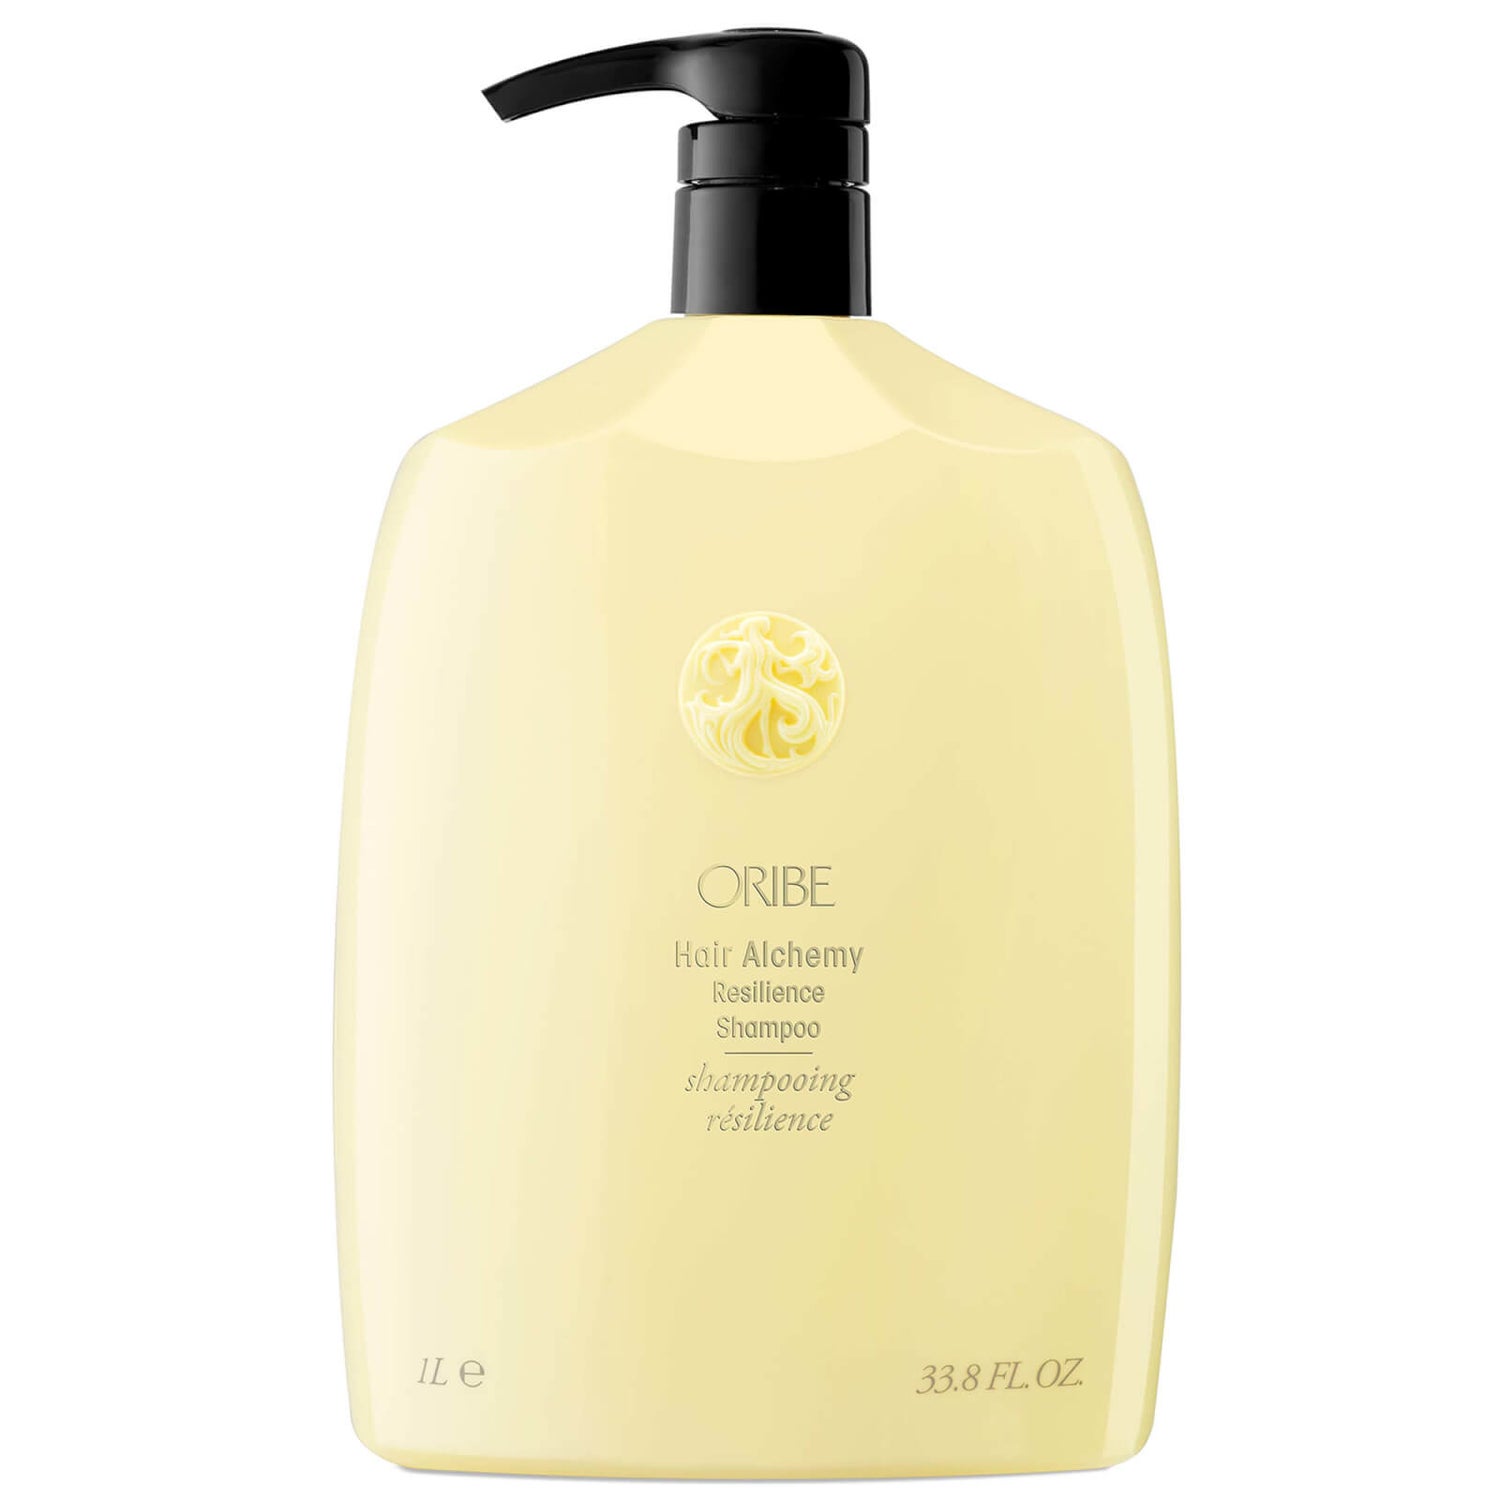 Oribe Hair Alchemy Resilience Shampoo 33.8 oz